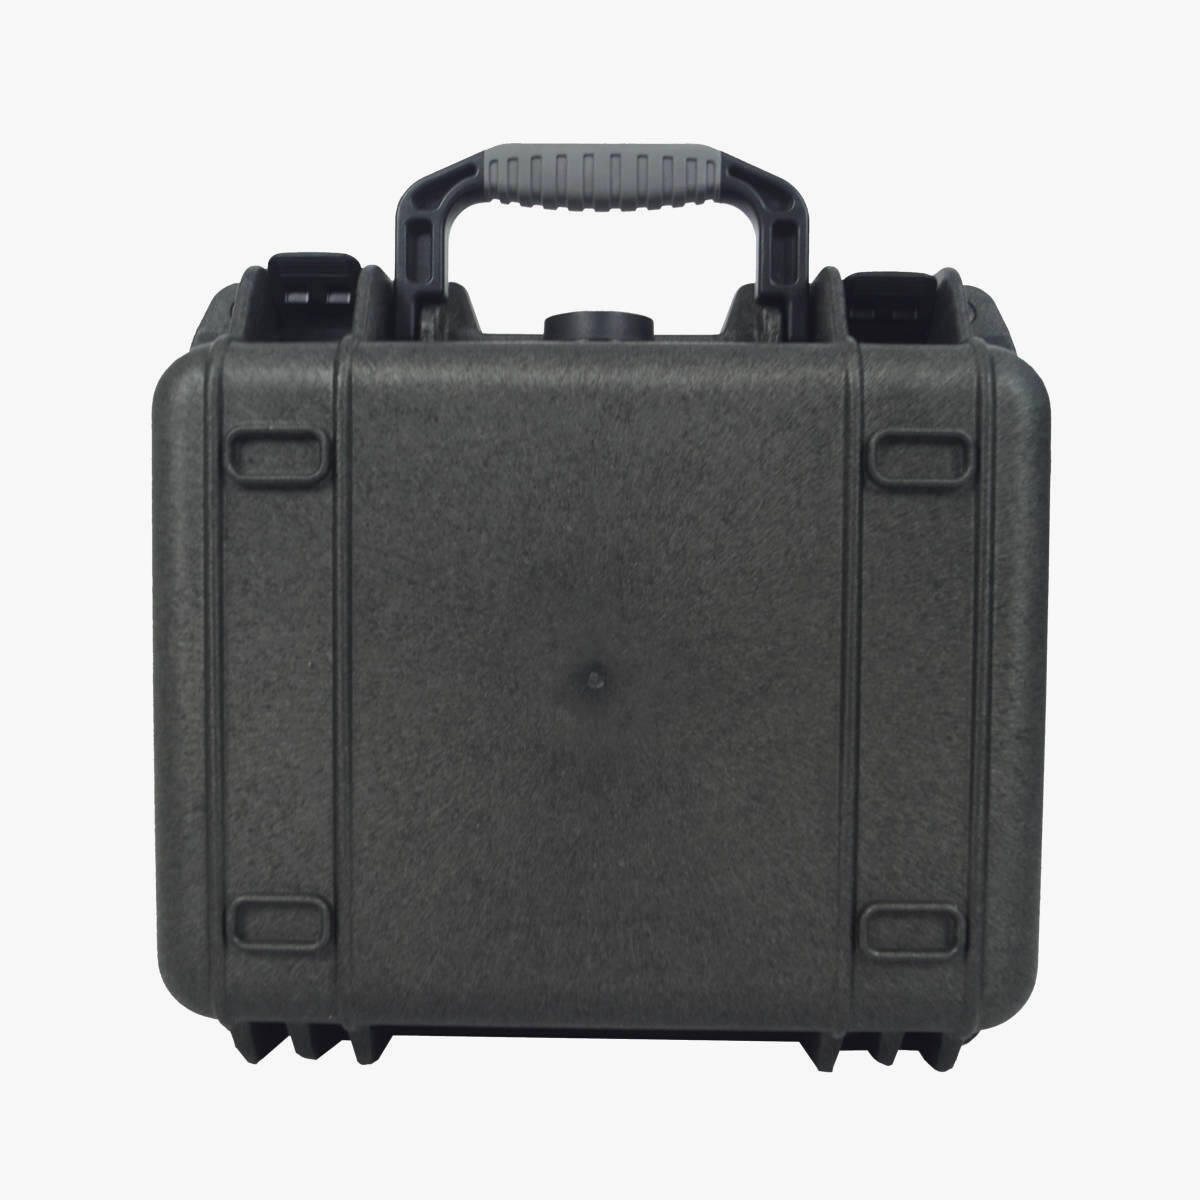 Lomo Centurion Dry Box - Midi Size - With Cubed Foam 3/7